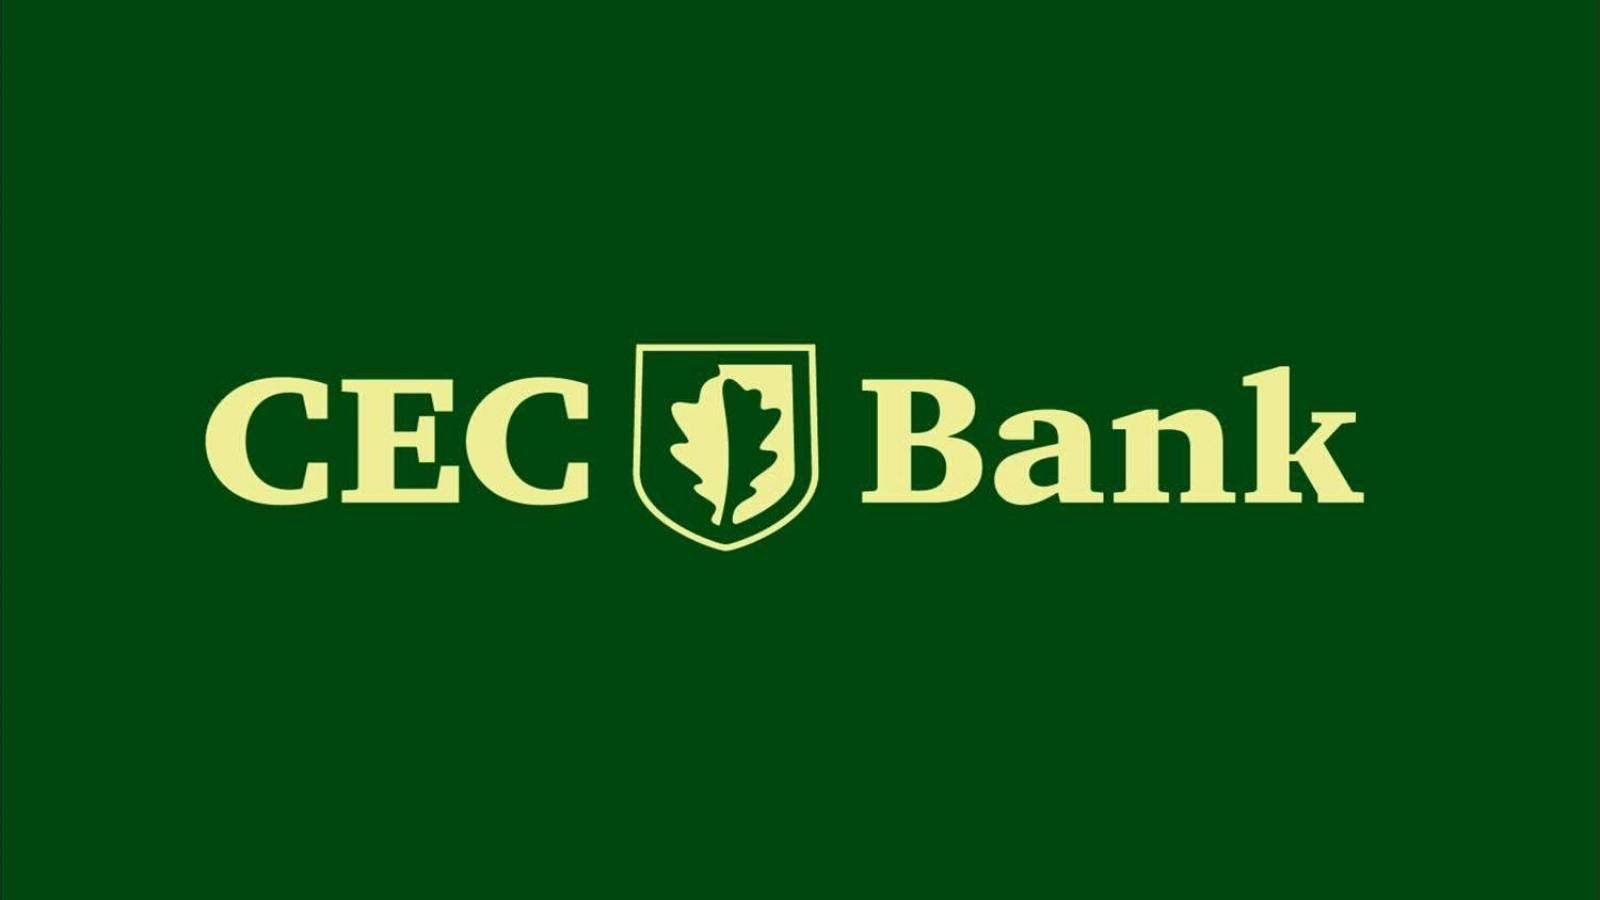 Jednostki banku CEC